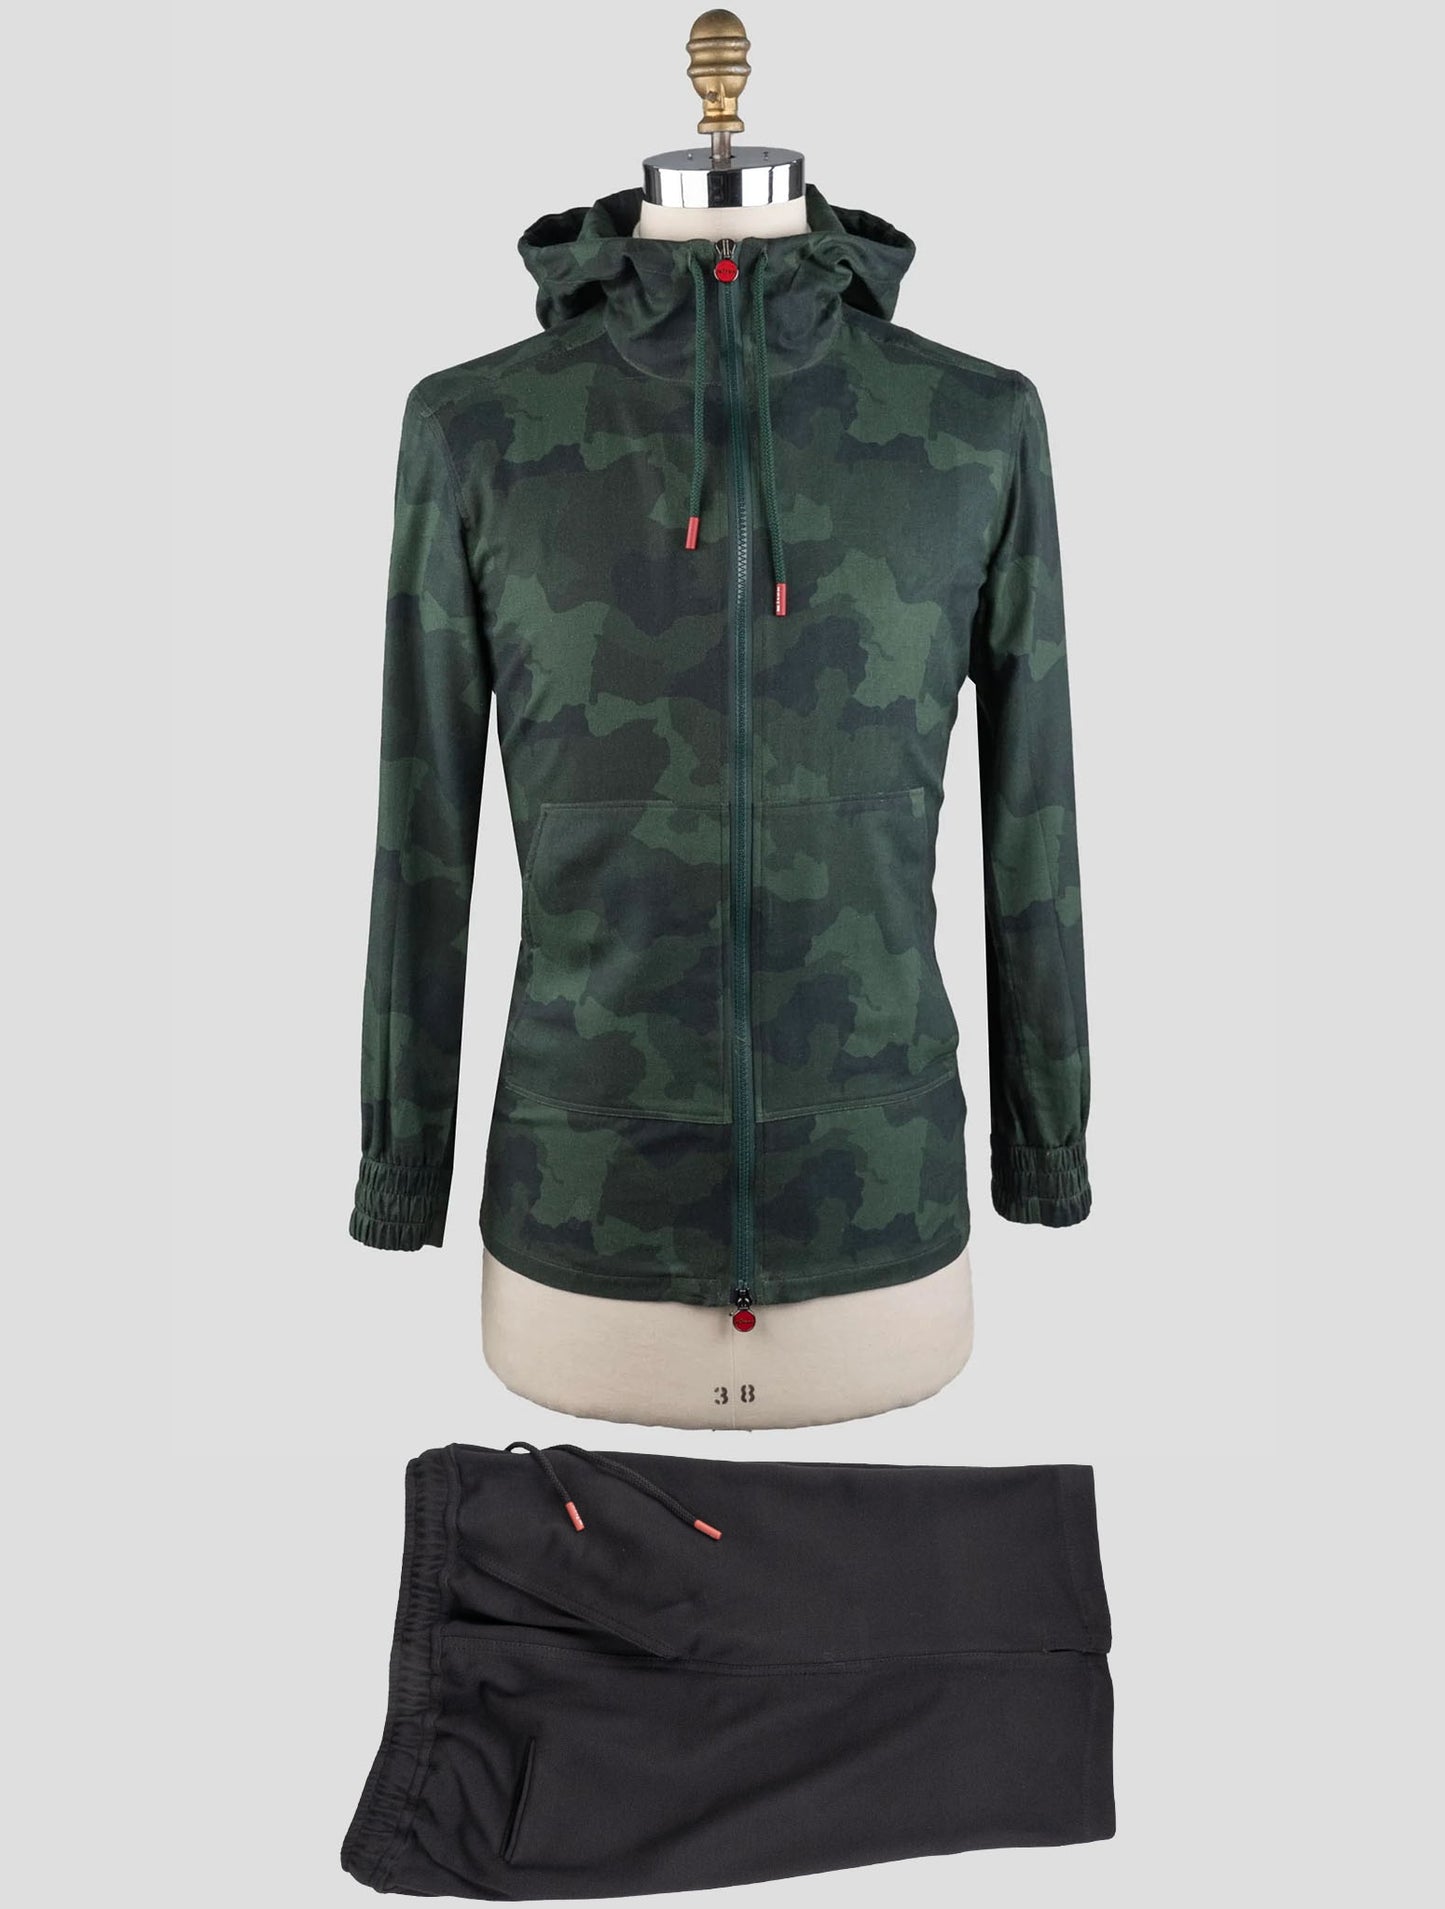 Kiton Matching Outfit-Grüne Umbi und schwarze kurze Hosen Trainings anzug